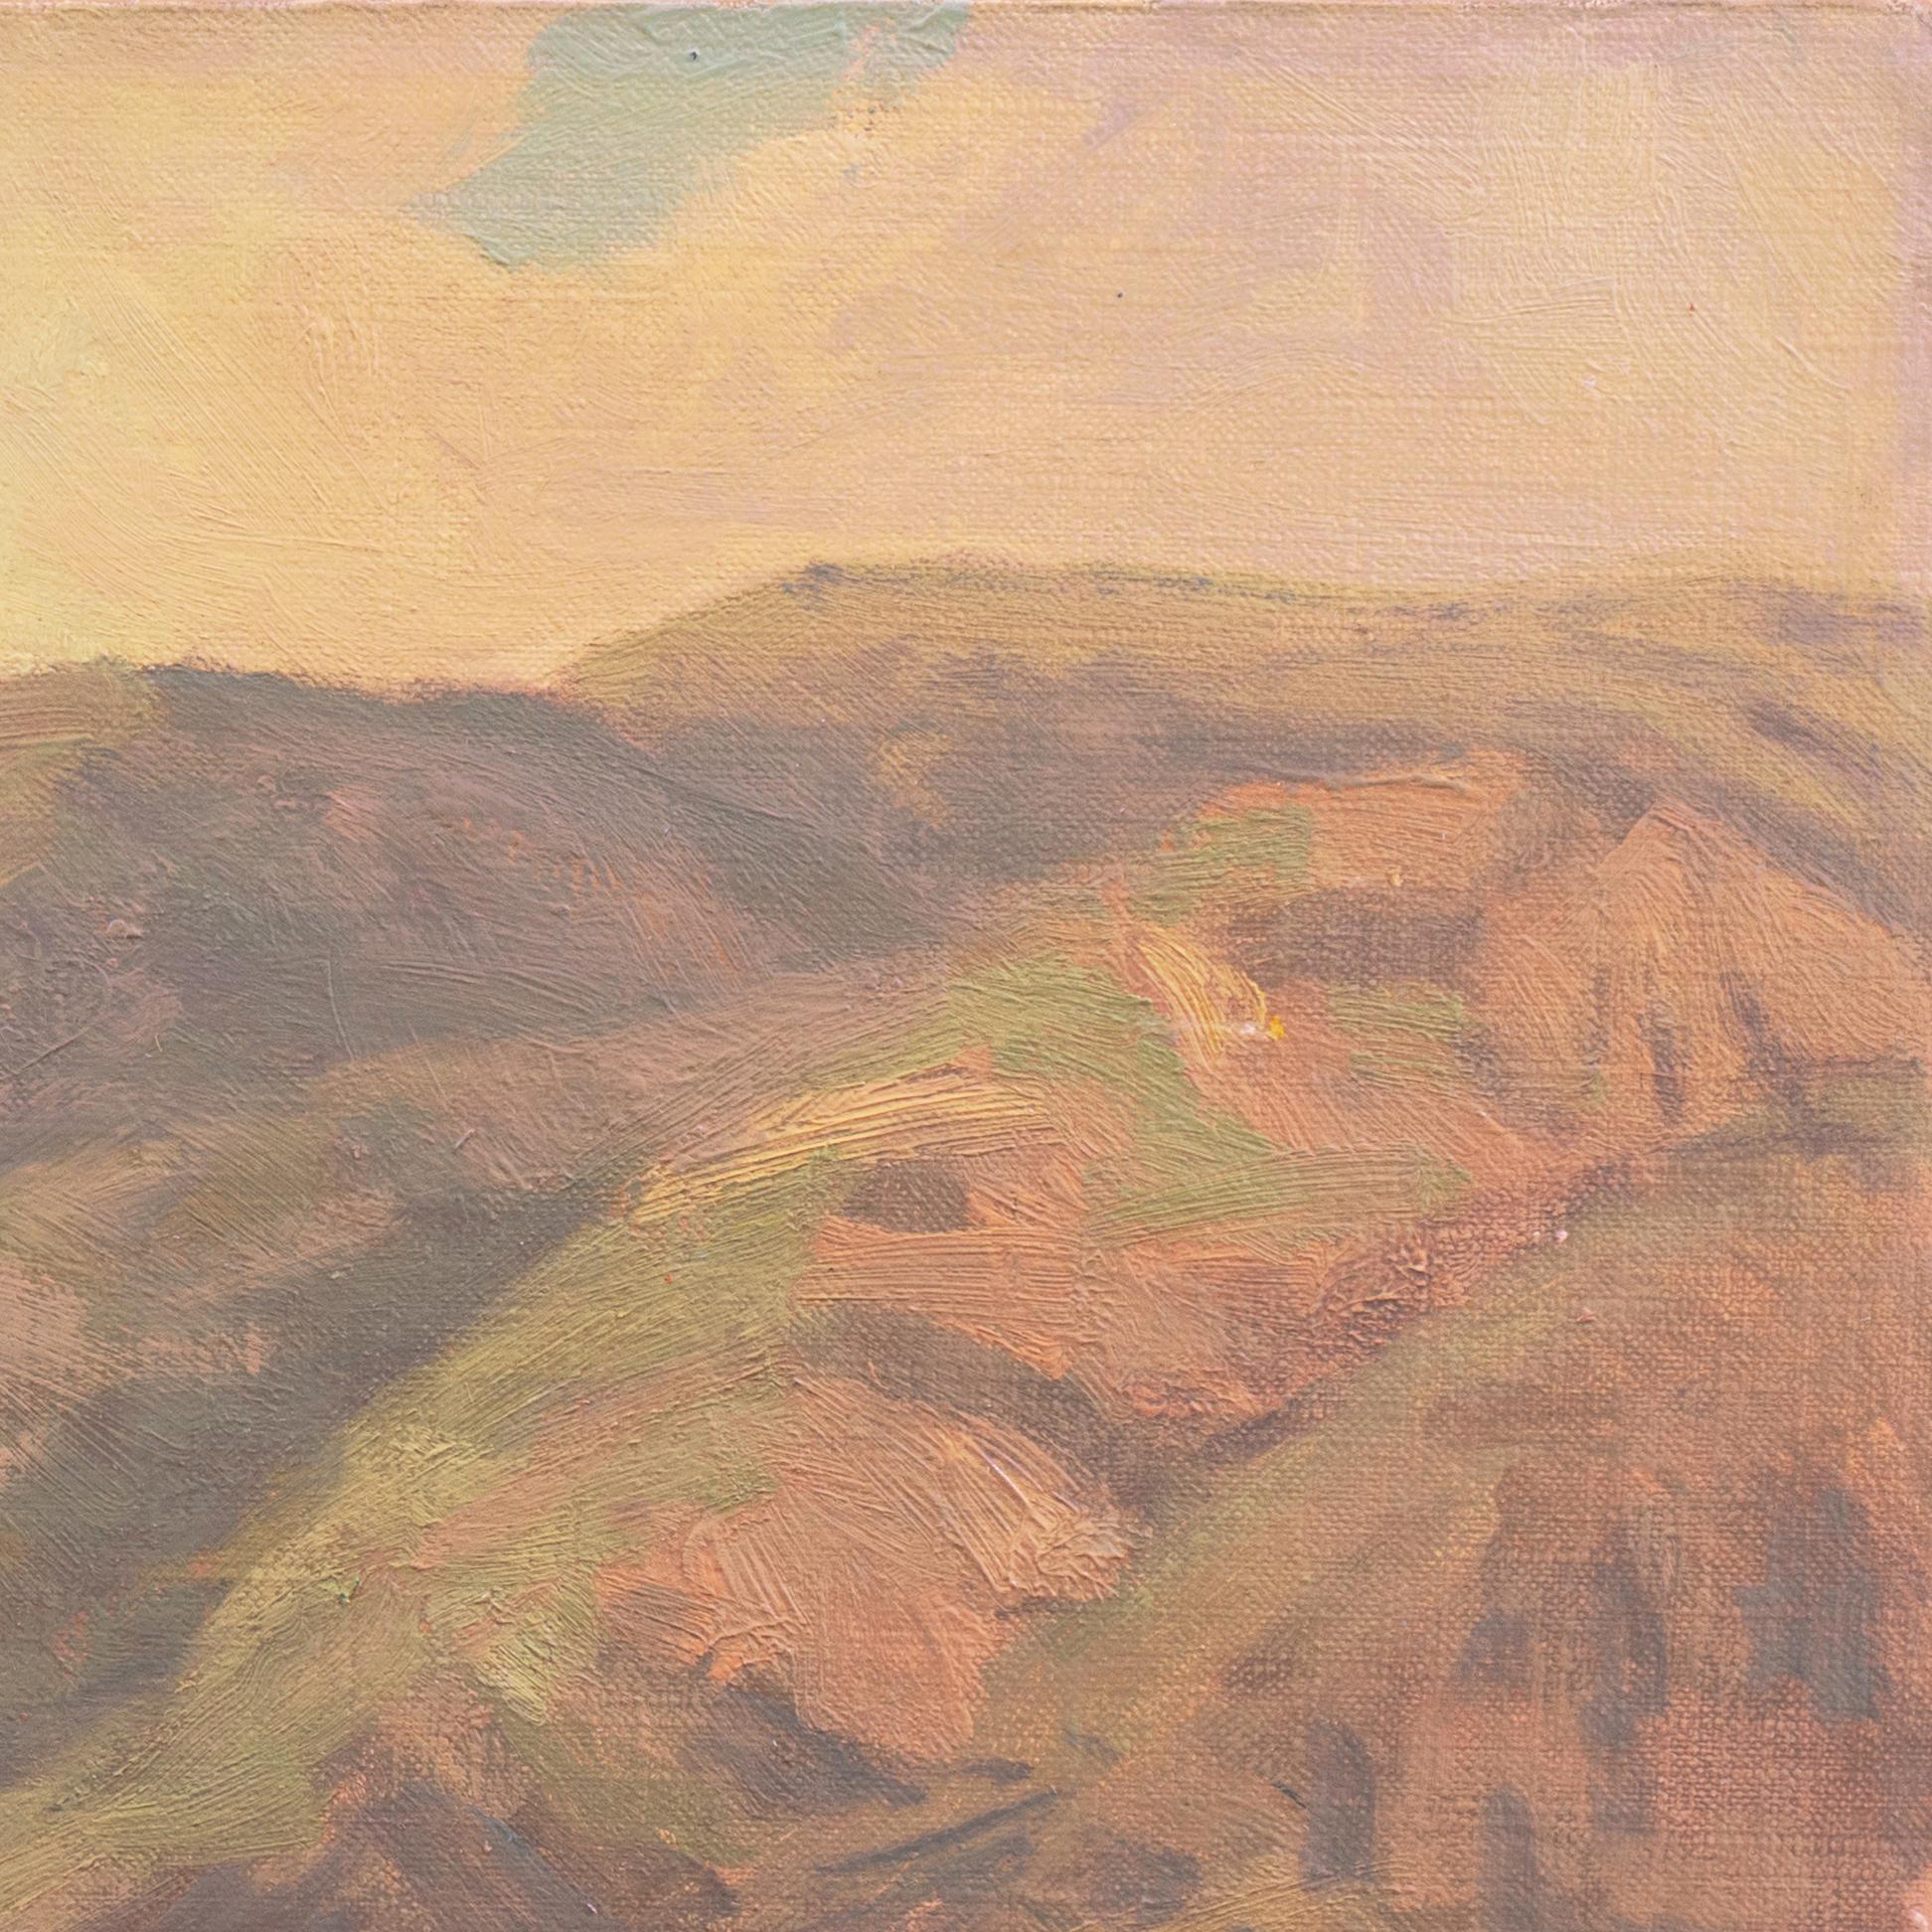 california hills painting